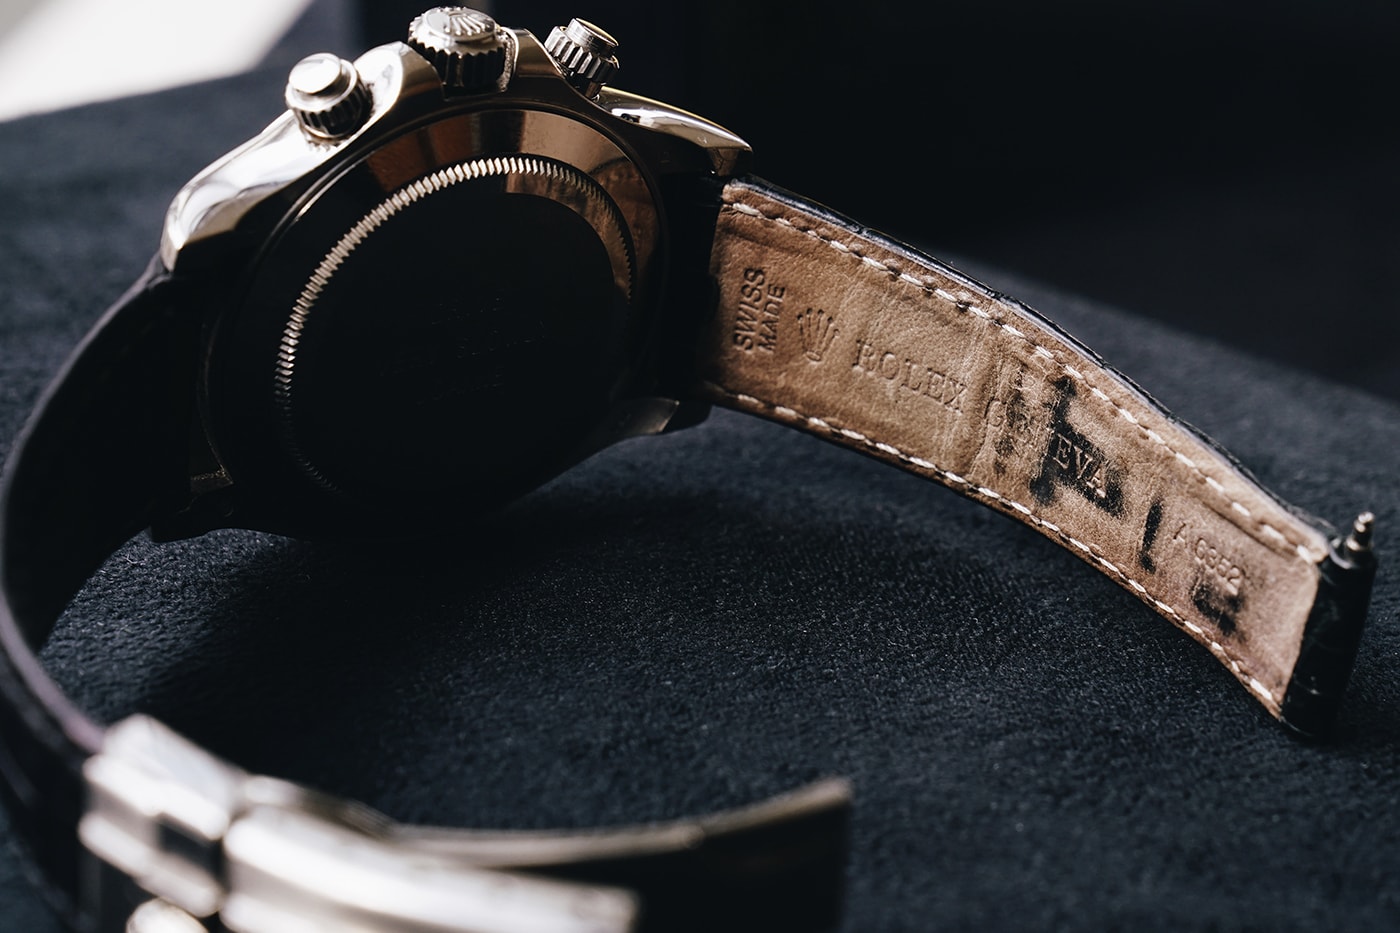 Paul Newman 生前持有 Rolex Daytona 珍貴腕錶即將正式展開拍賣